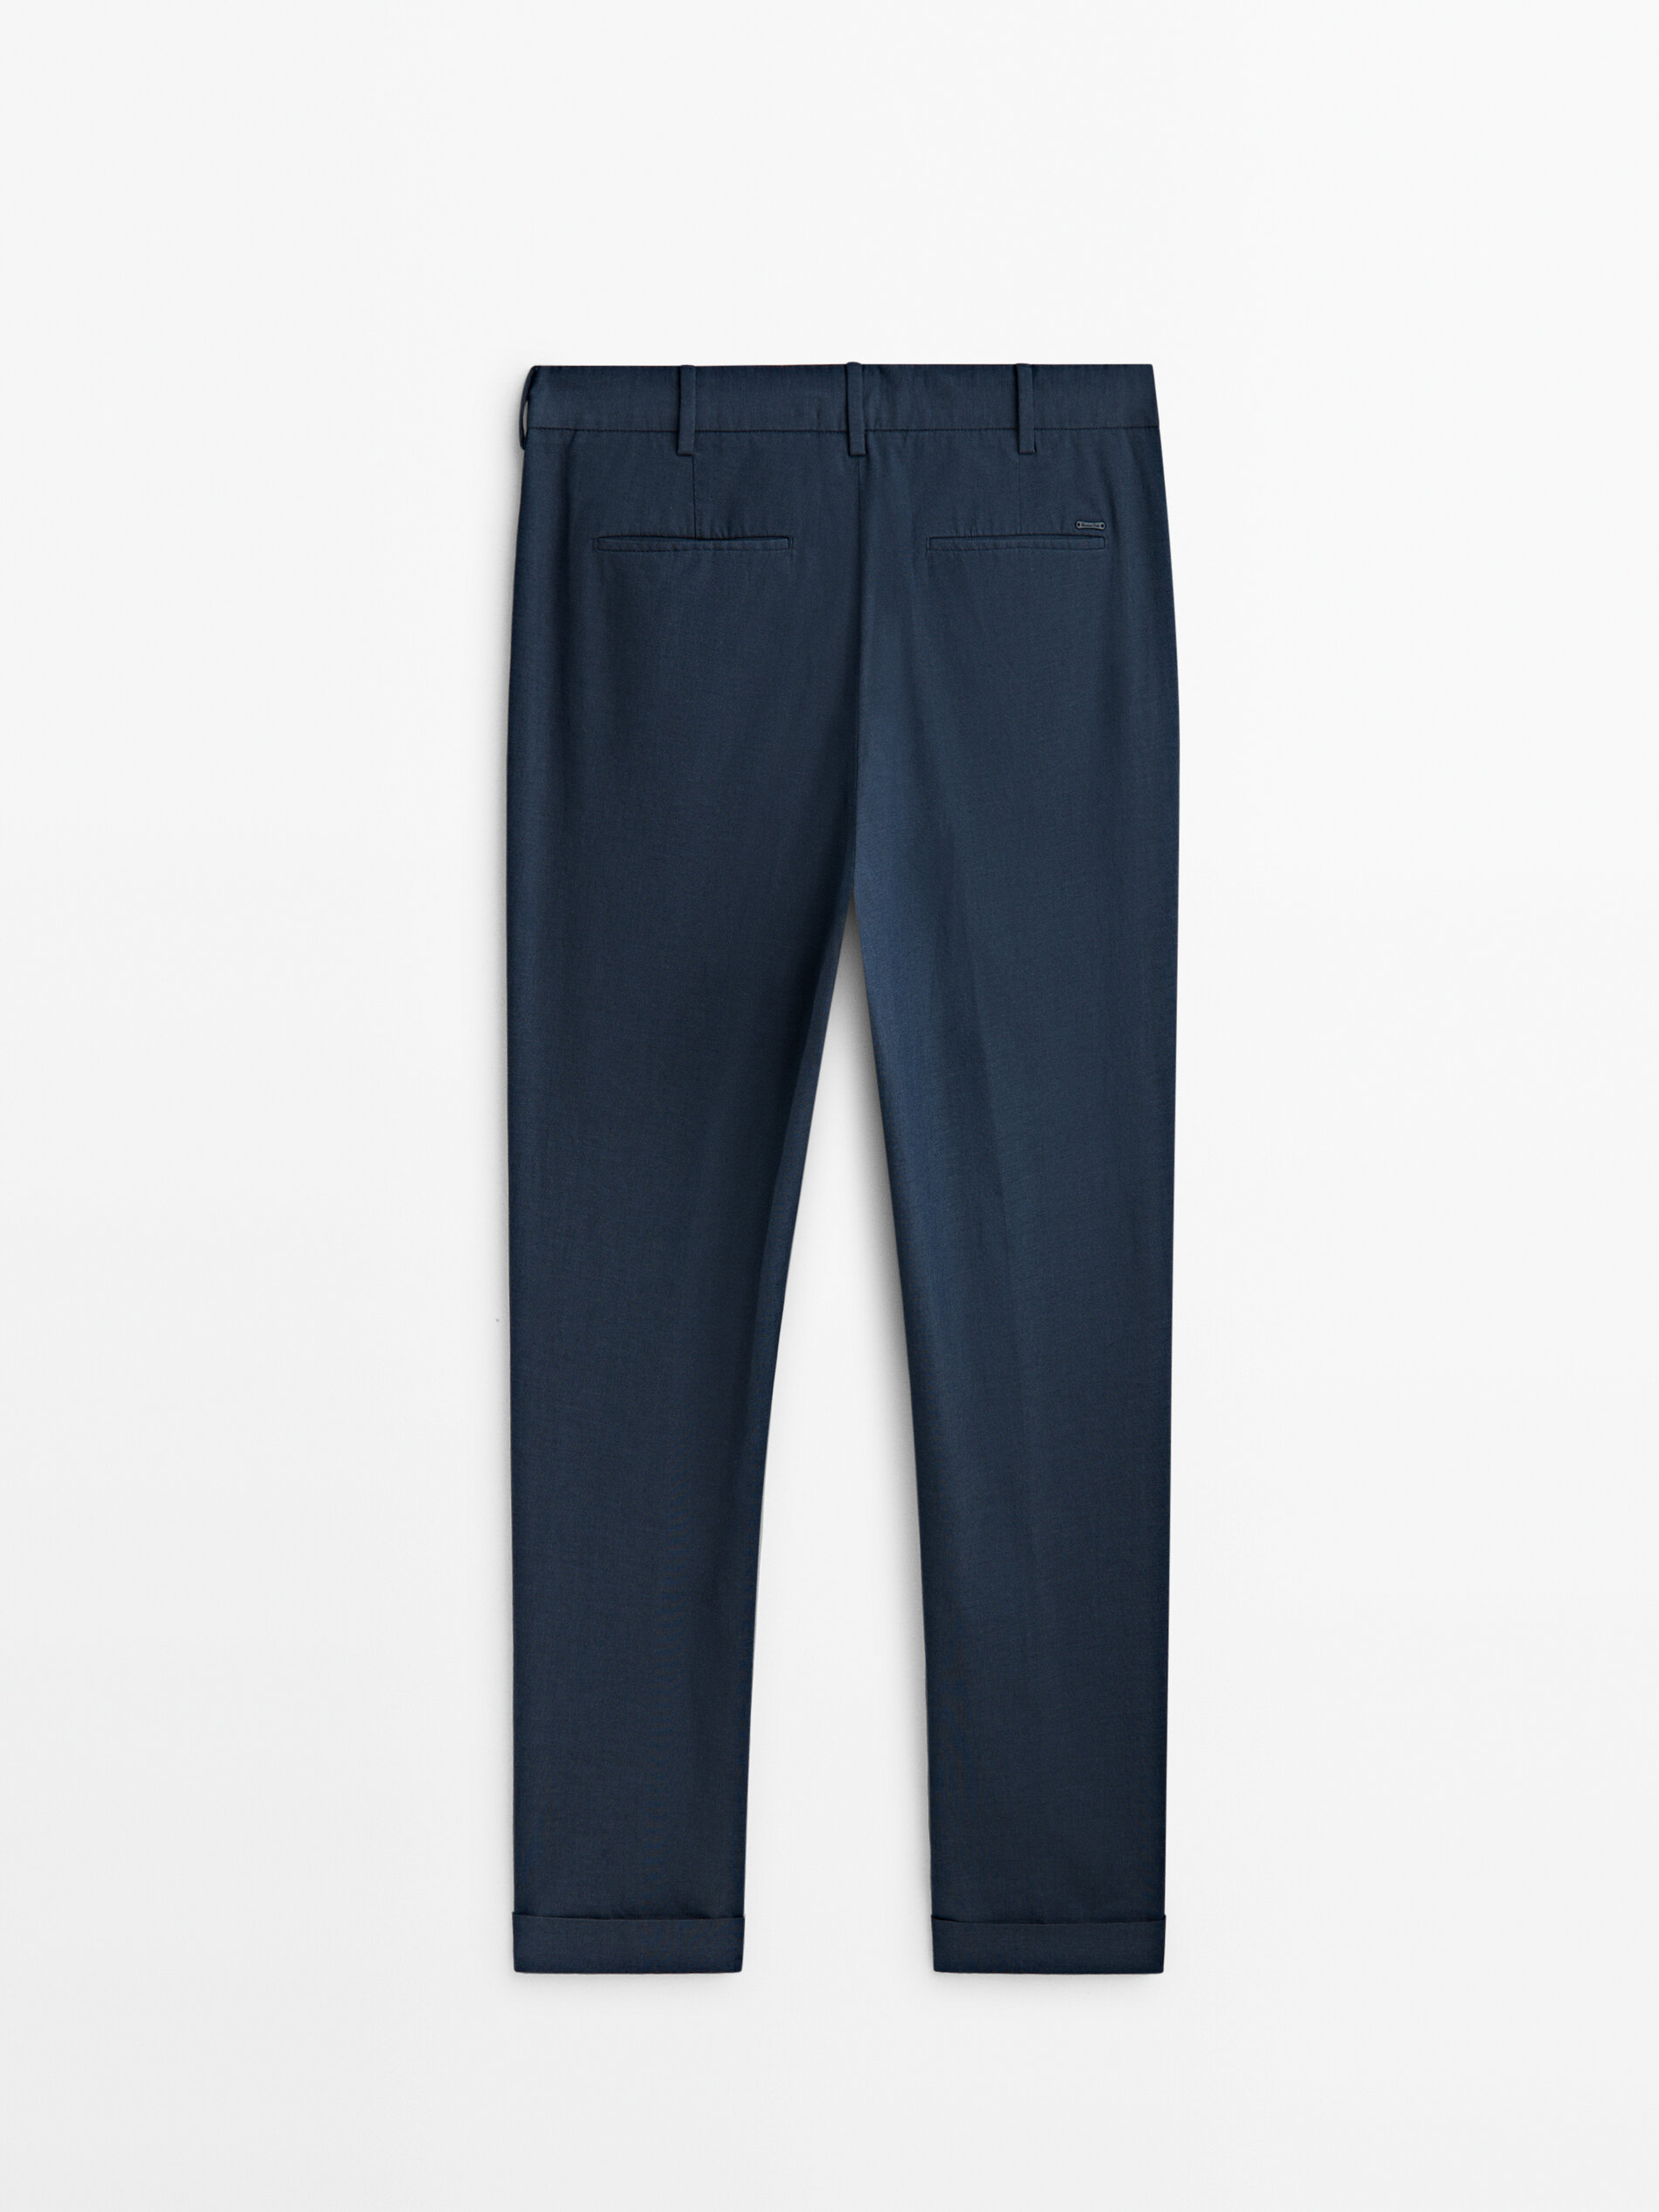 Sojanya (Since 1958) Men's Cotton Blend Dark Navy Blue Solid Trousers